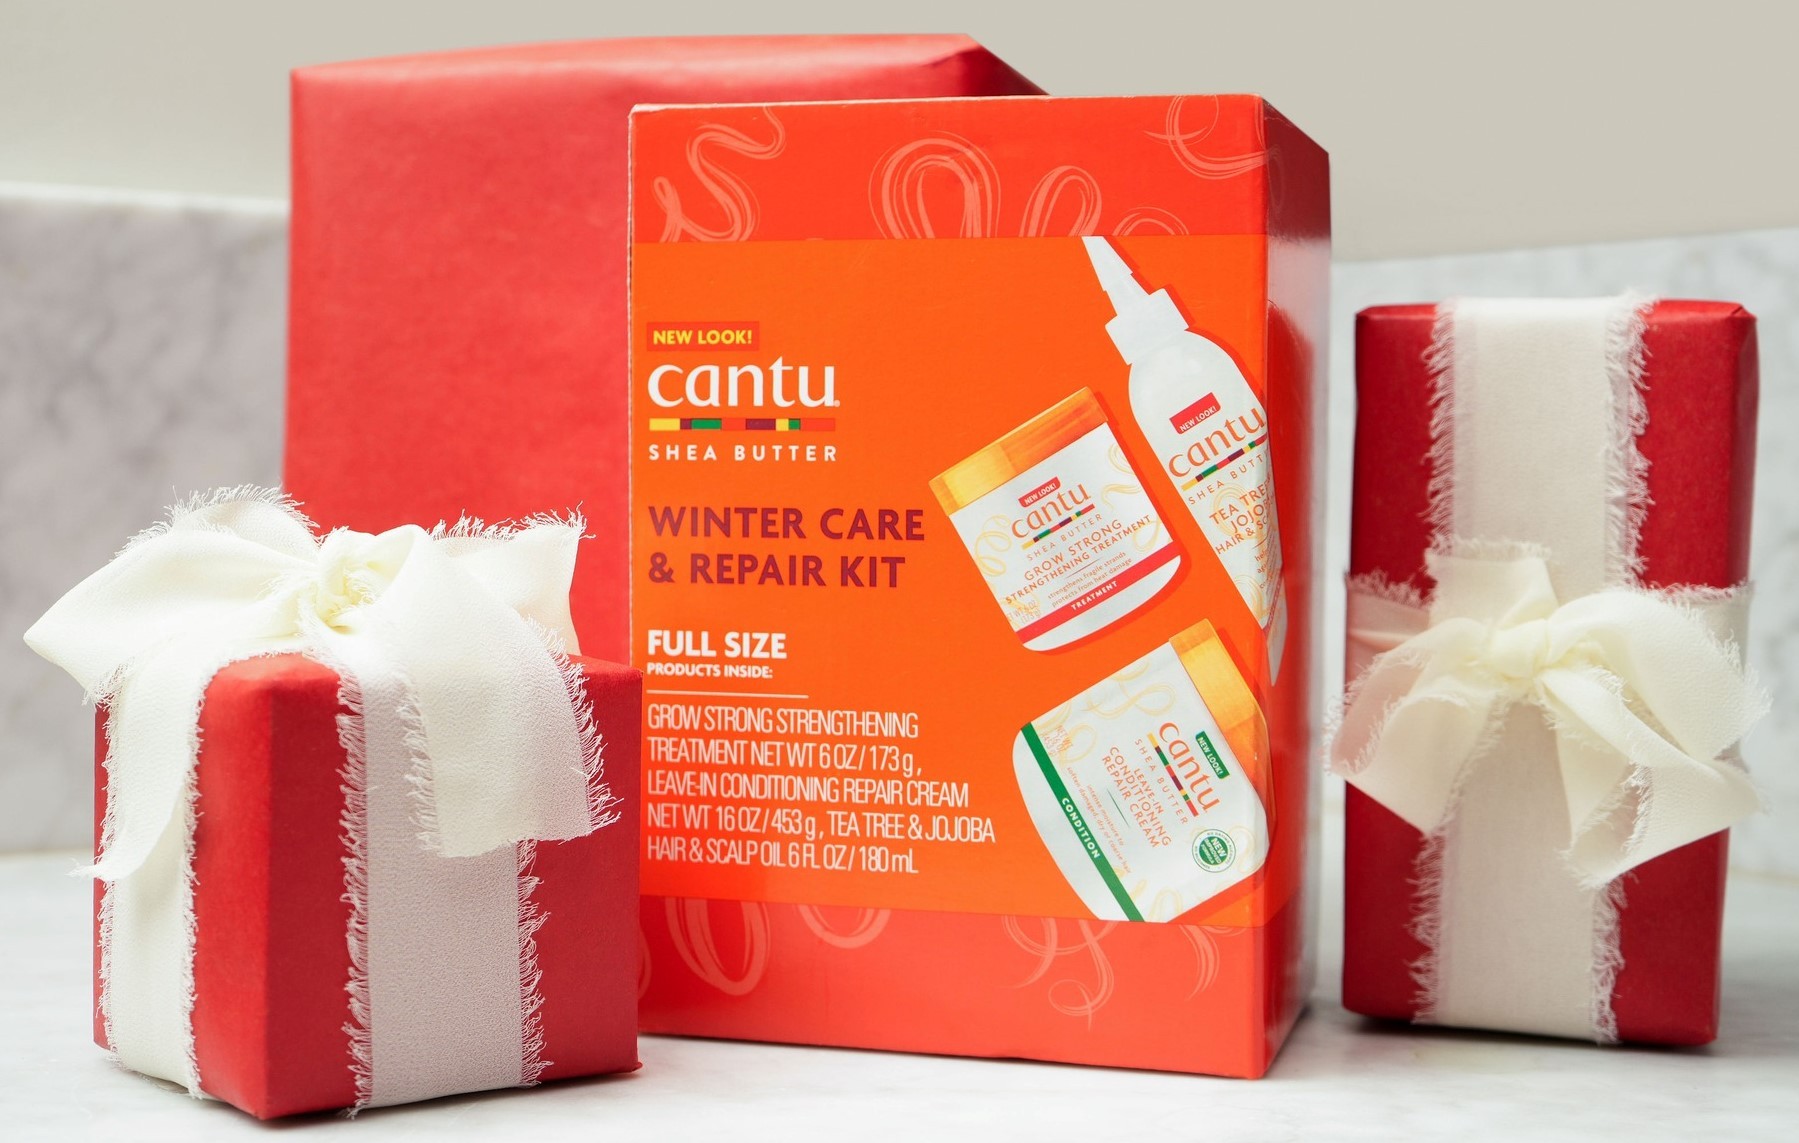 Cantu Beauty Cantu Shea Butter Winter Care & Repair Kit